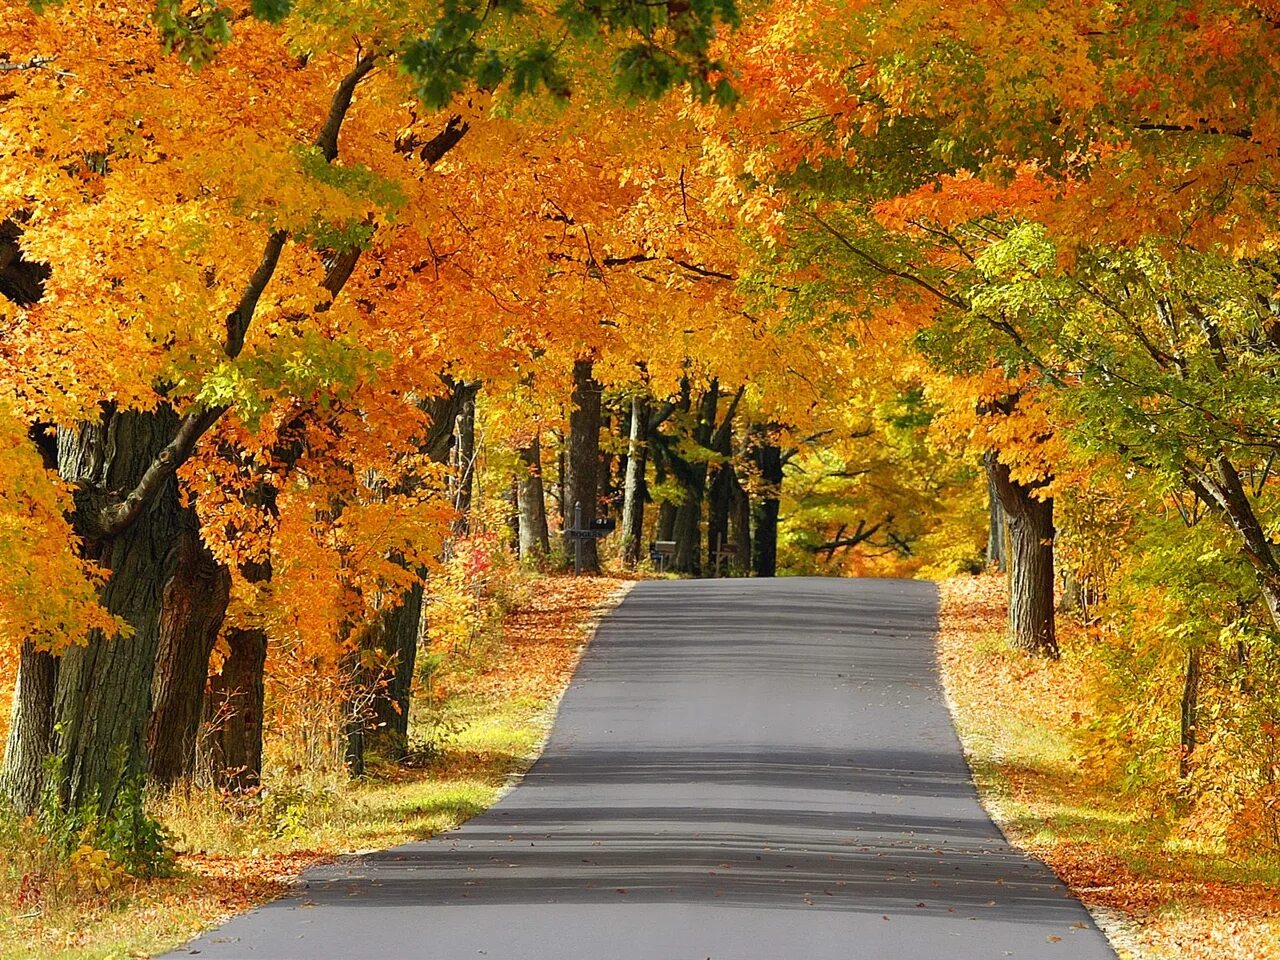 Времена года 5 октября. Осень. Осенняя дорога. Осенняя любовь. Осень картинки.